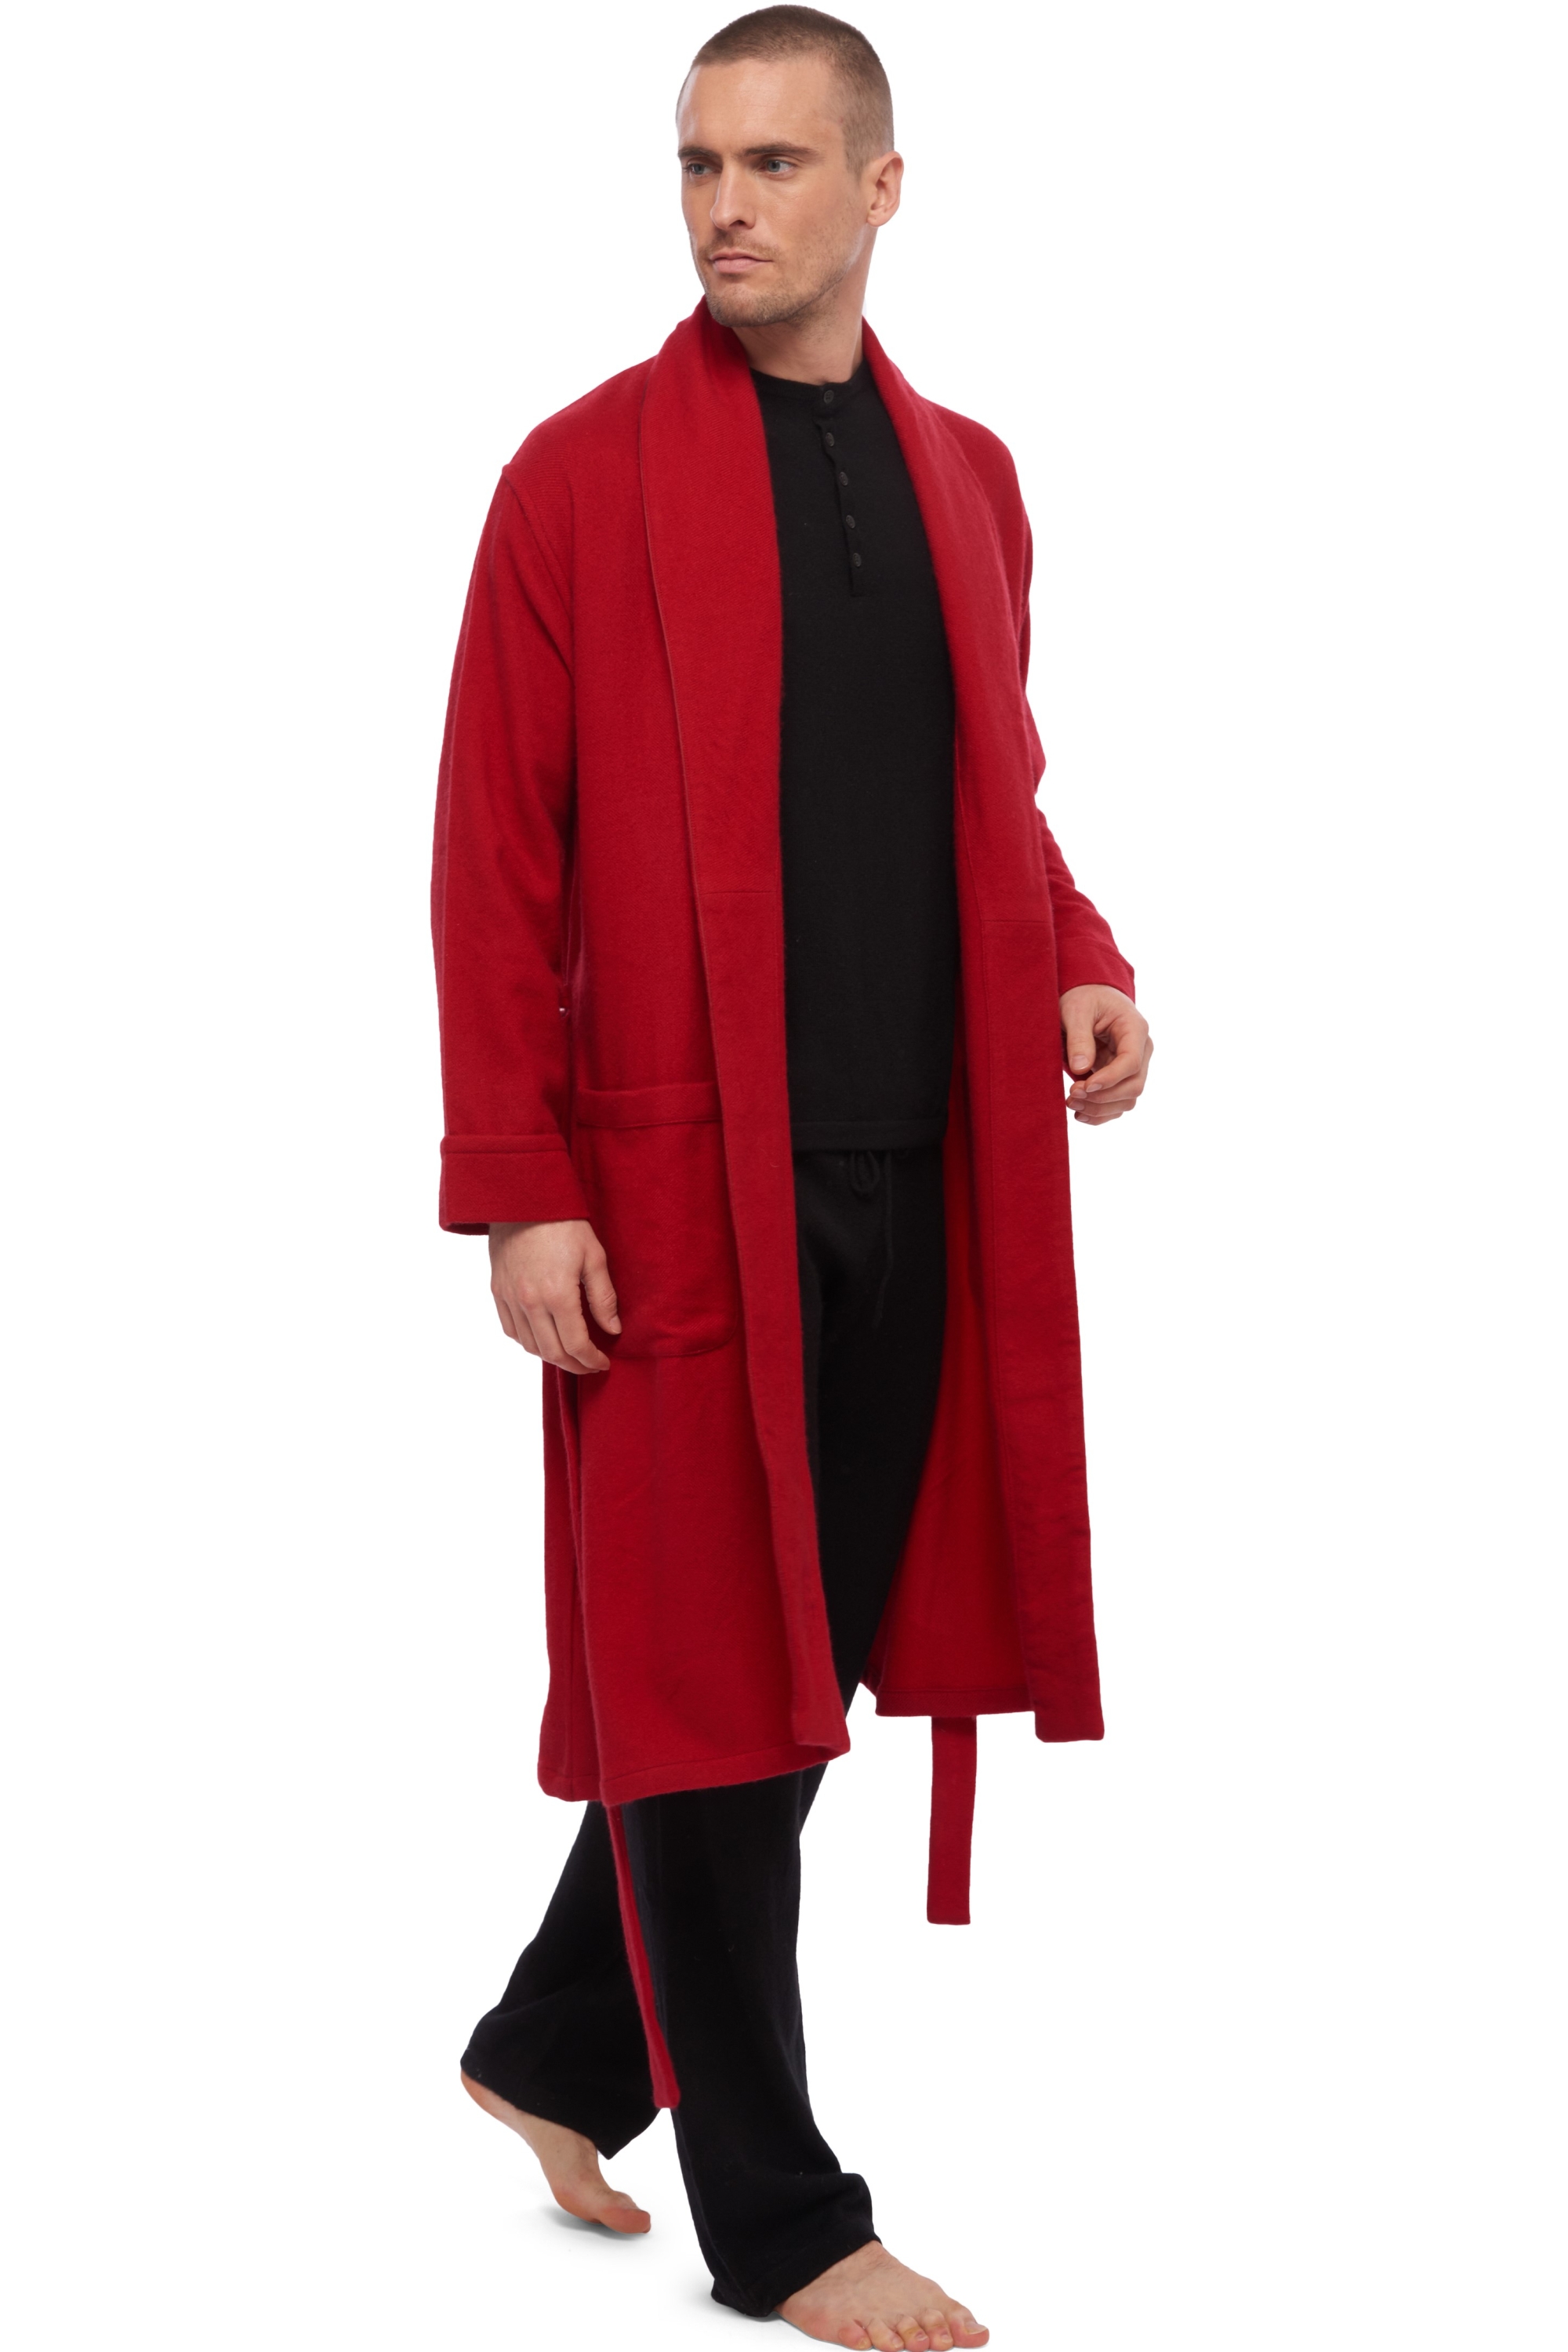 Cachemire accessoires homewear working rouge profond t1